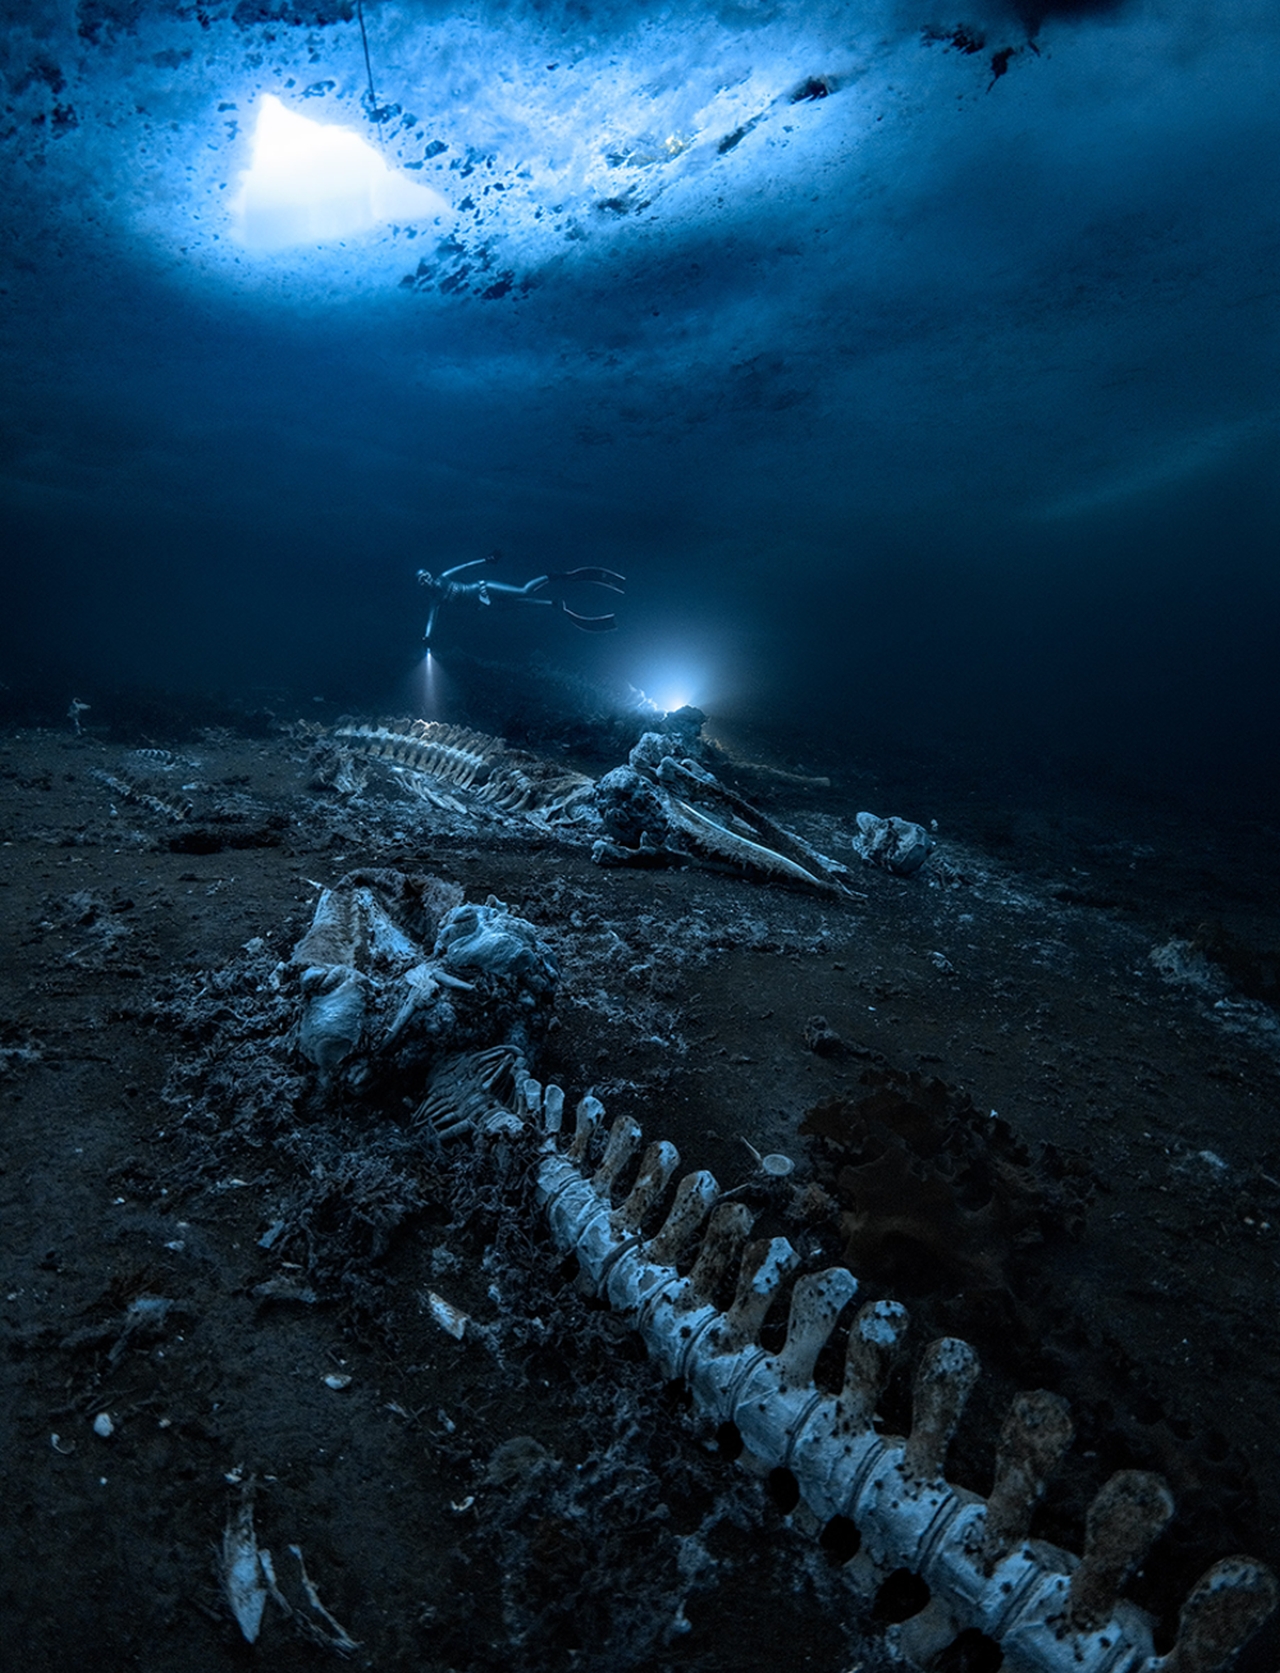 Winners of Scuba Diving's 2022 Underwater Photo Contest - Alex Dawson